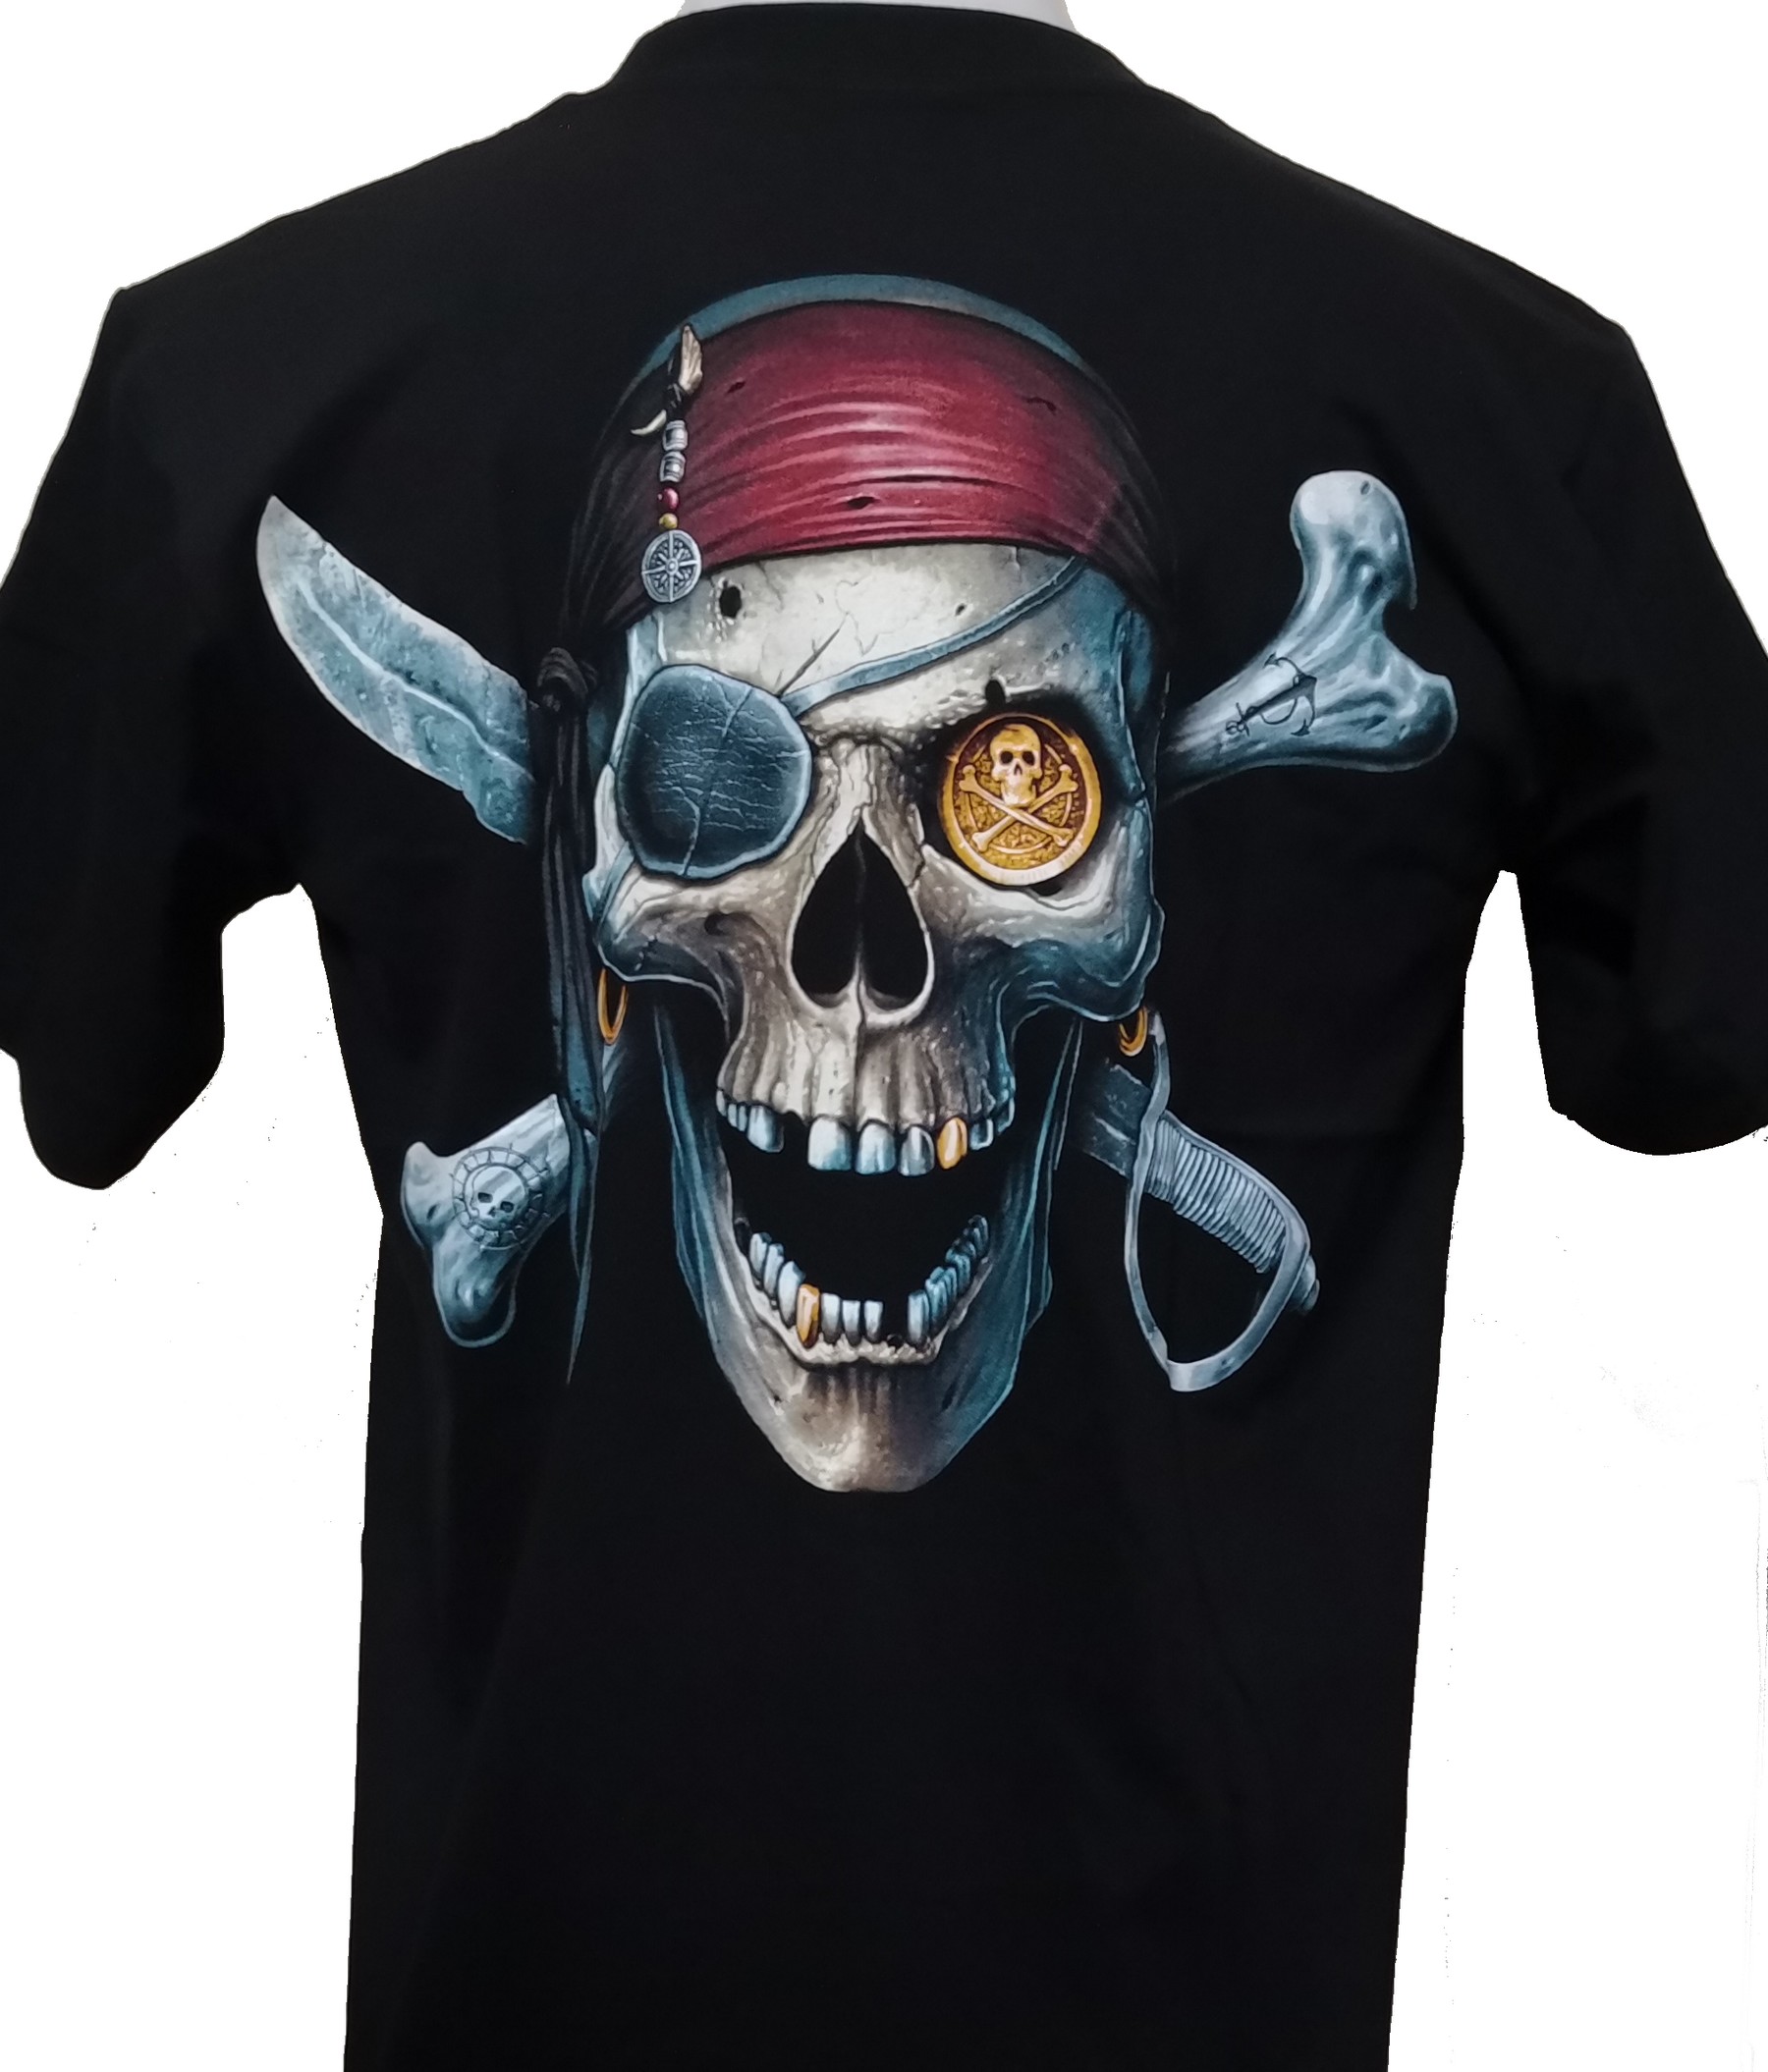 Skull t-shirt size S the (Glow Dark) RoxxBKK – in